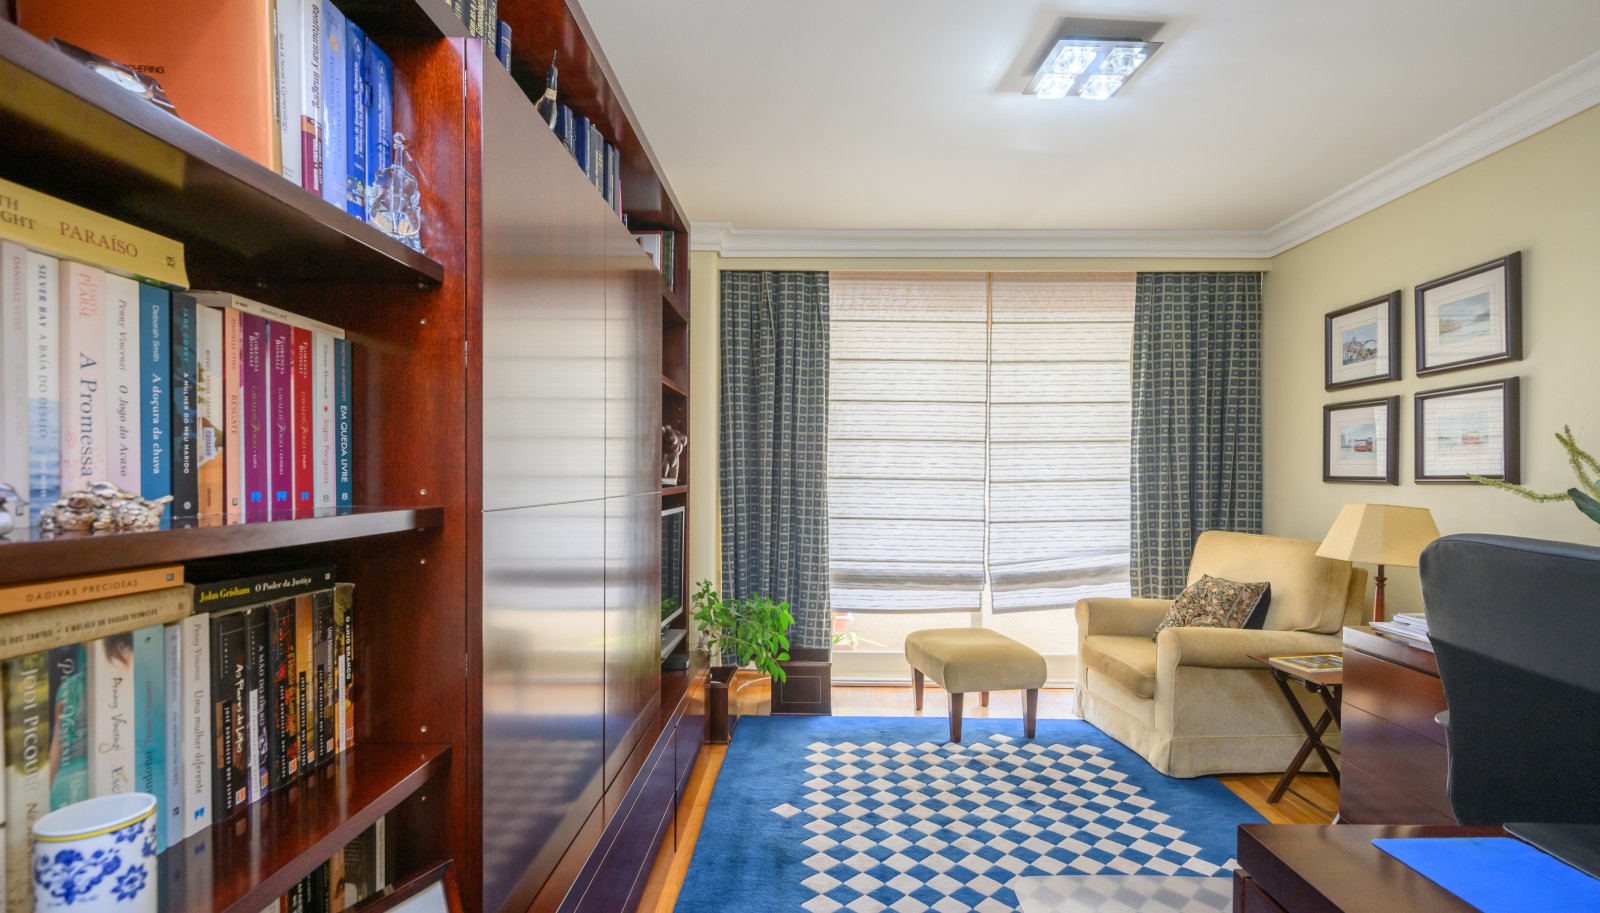 Appartement de 5 chambres avec balcon, à vendre, à V. N. Gaia, Porto, Portugal_236328